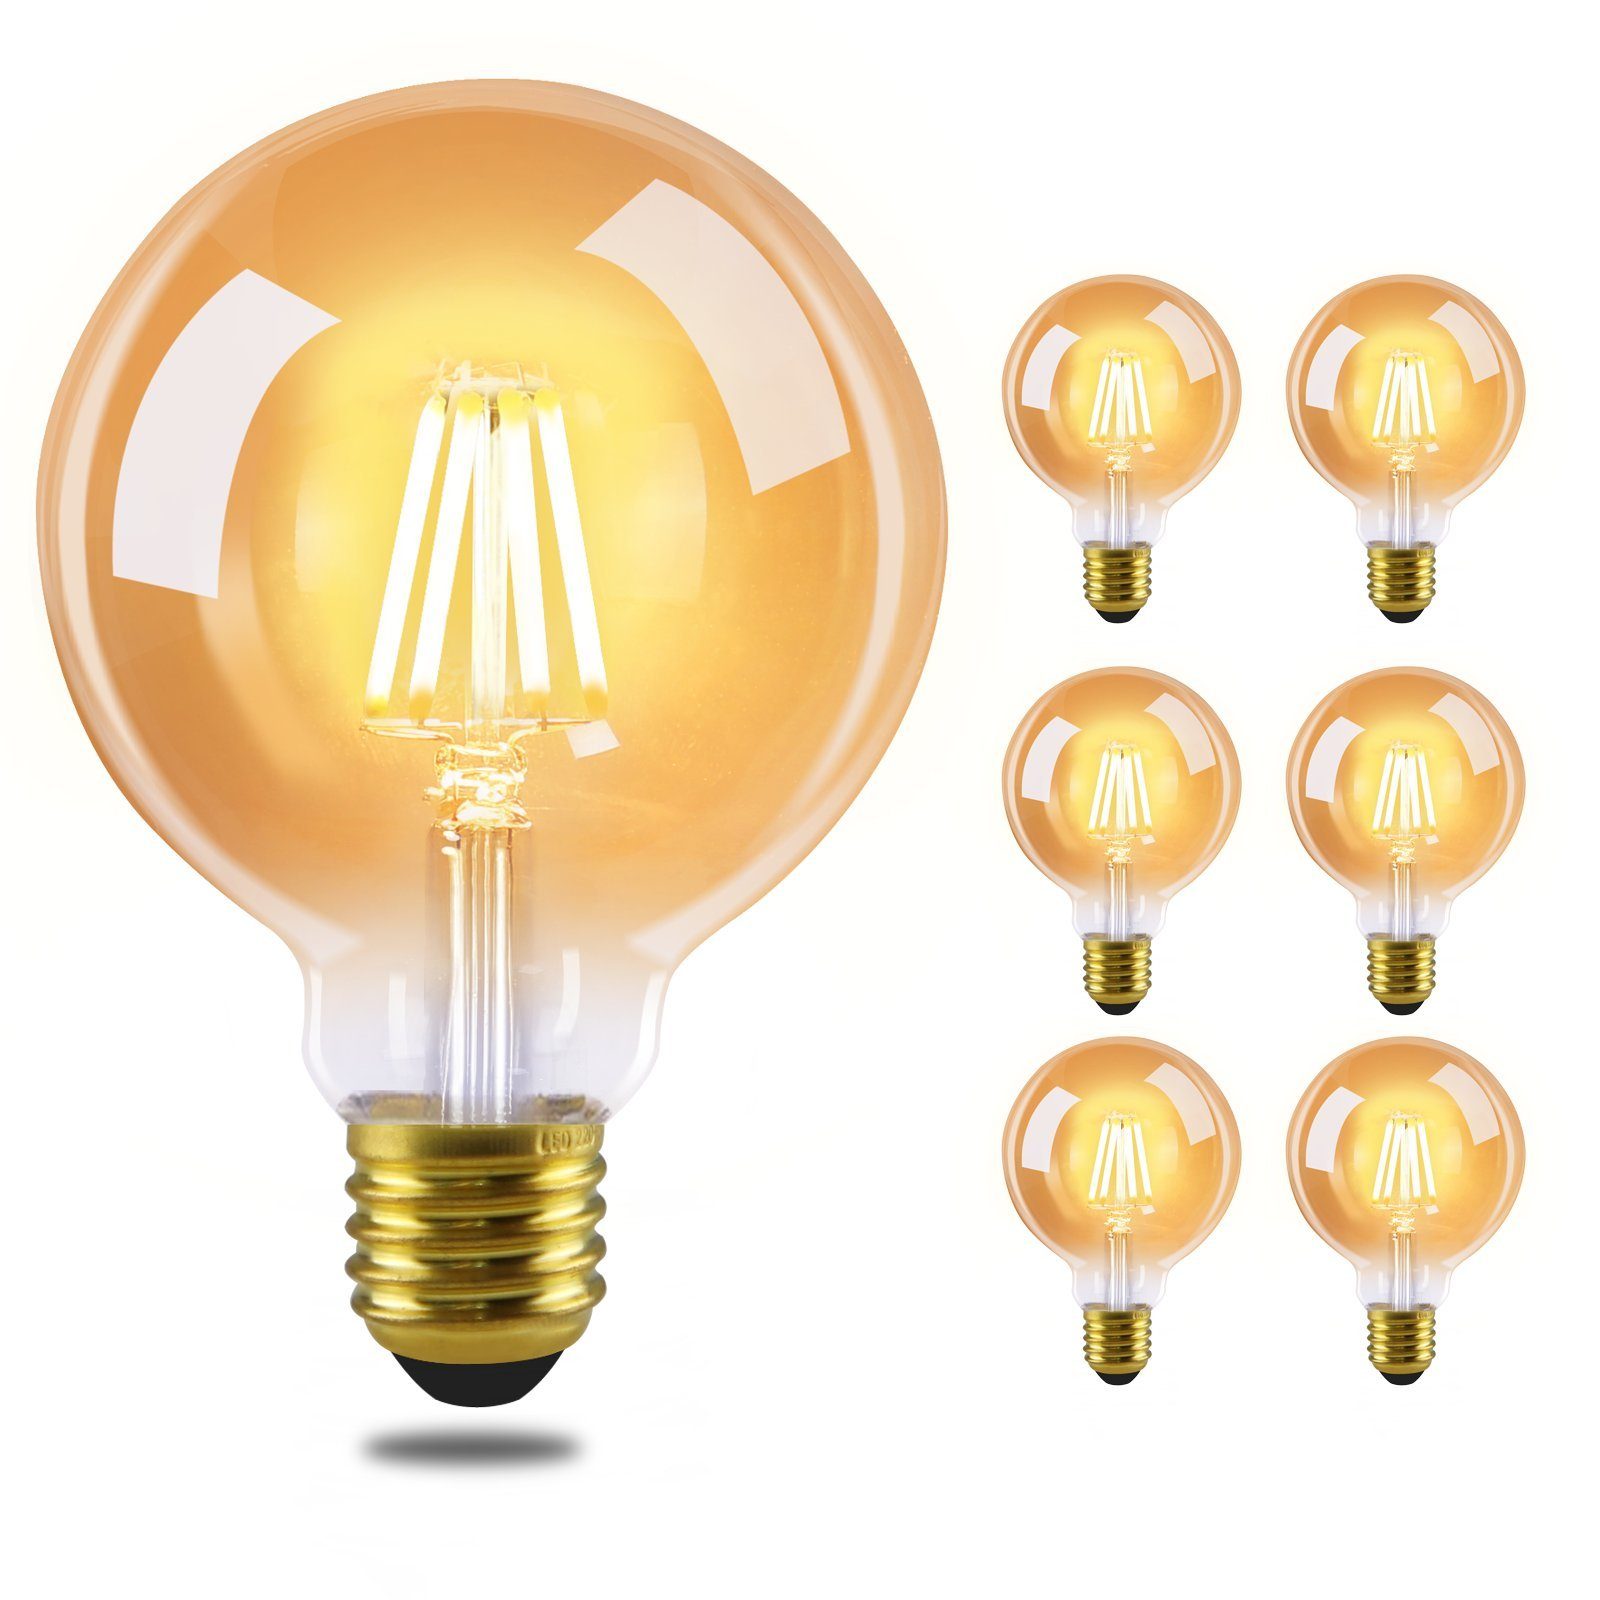 ZMH LED-Leuchtmittel Edison LED Vintage St., Filament Glas warmweiß, E27, 6 Birne Energiesparlampe - Retro G80 2700K, Glühbirne